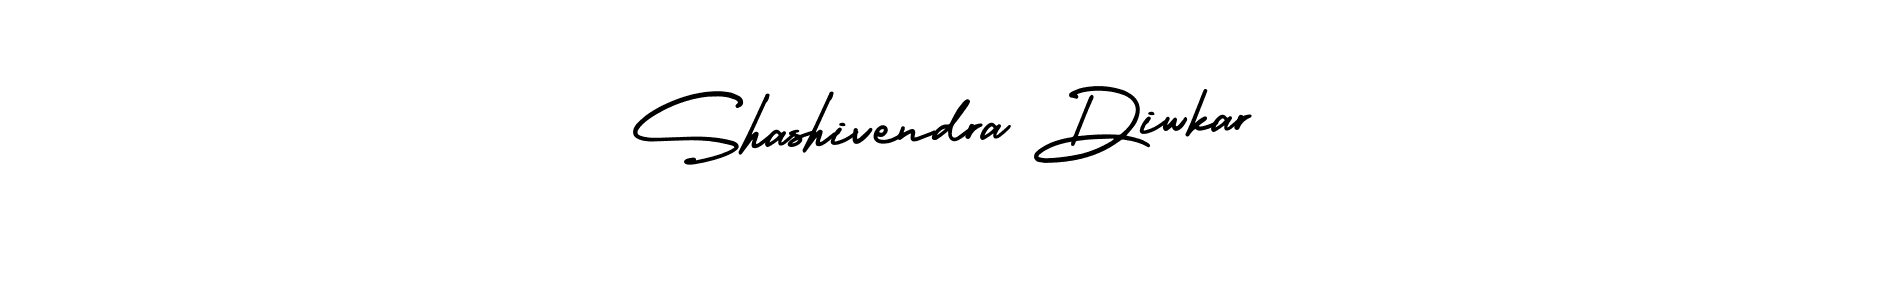 How to Draw Shashivendra Diwkar signature style? AmerikaSignatureDemo-Regular is a latest design signature styles for name Shashivendra Diwkar. Shashivendra Diwkar signature style 3 images and pictures png